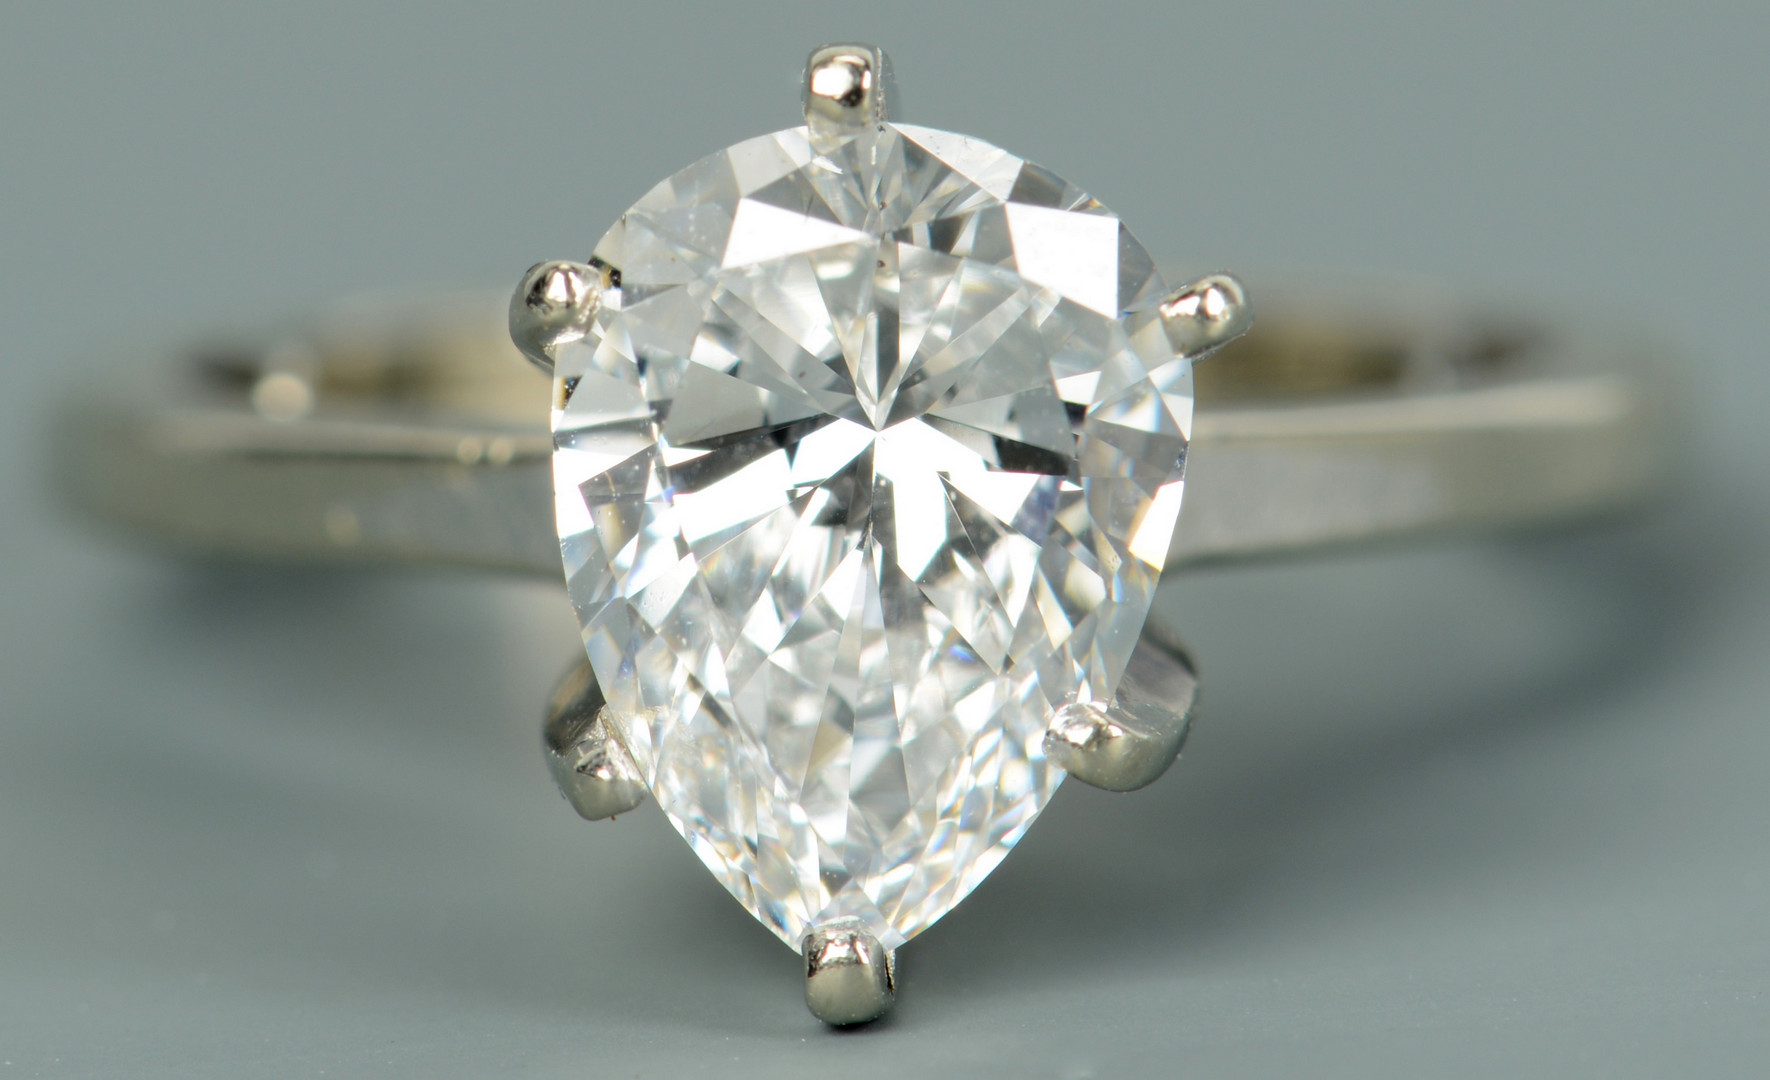 Lot 103: Pear-shaped D color diamond, GIA